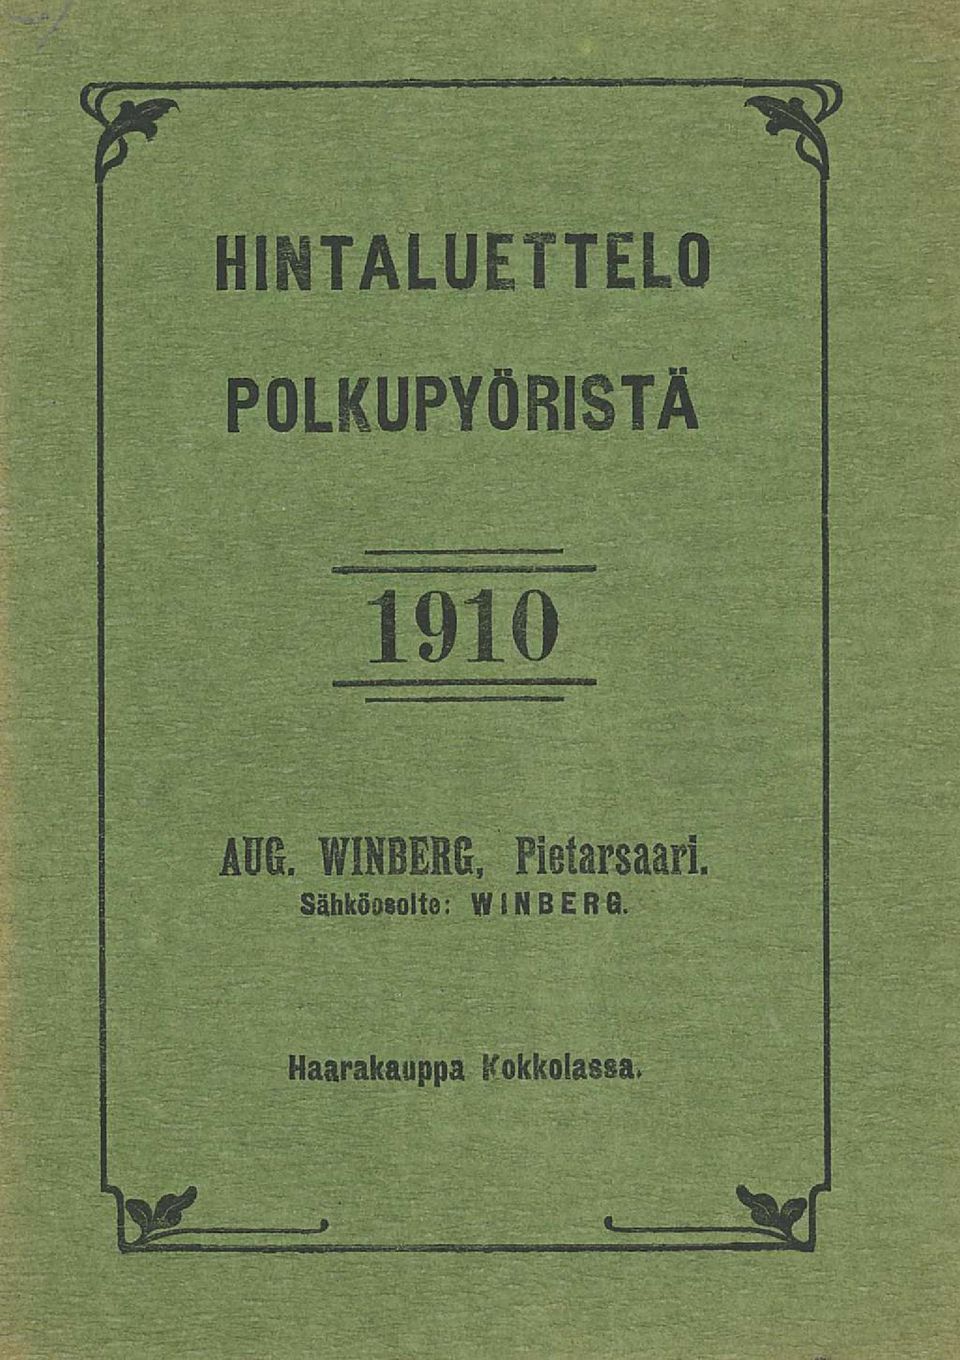 WINBERG Pietarsaari